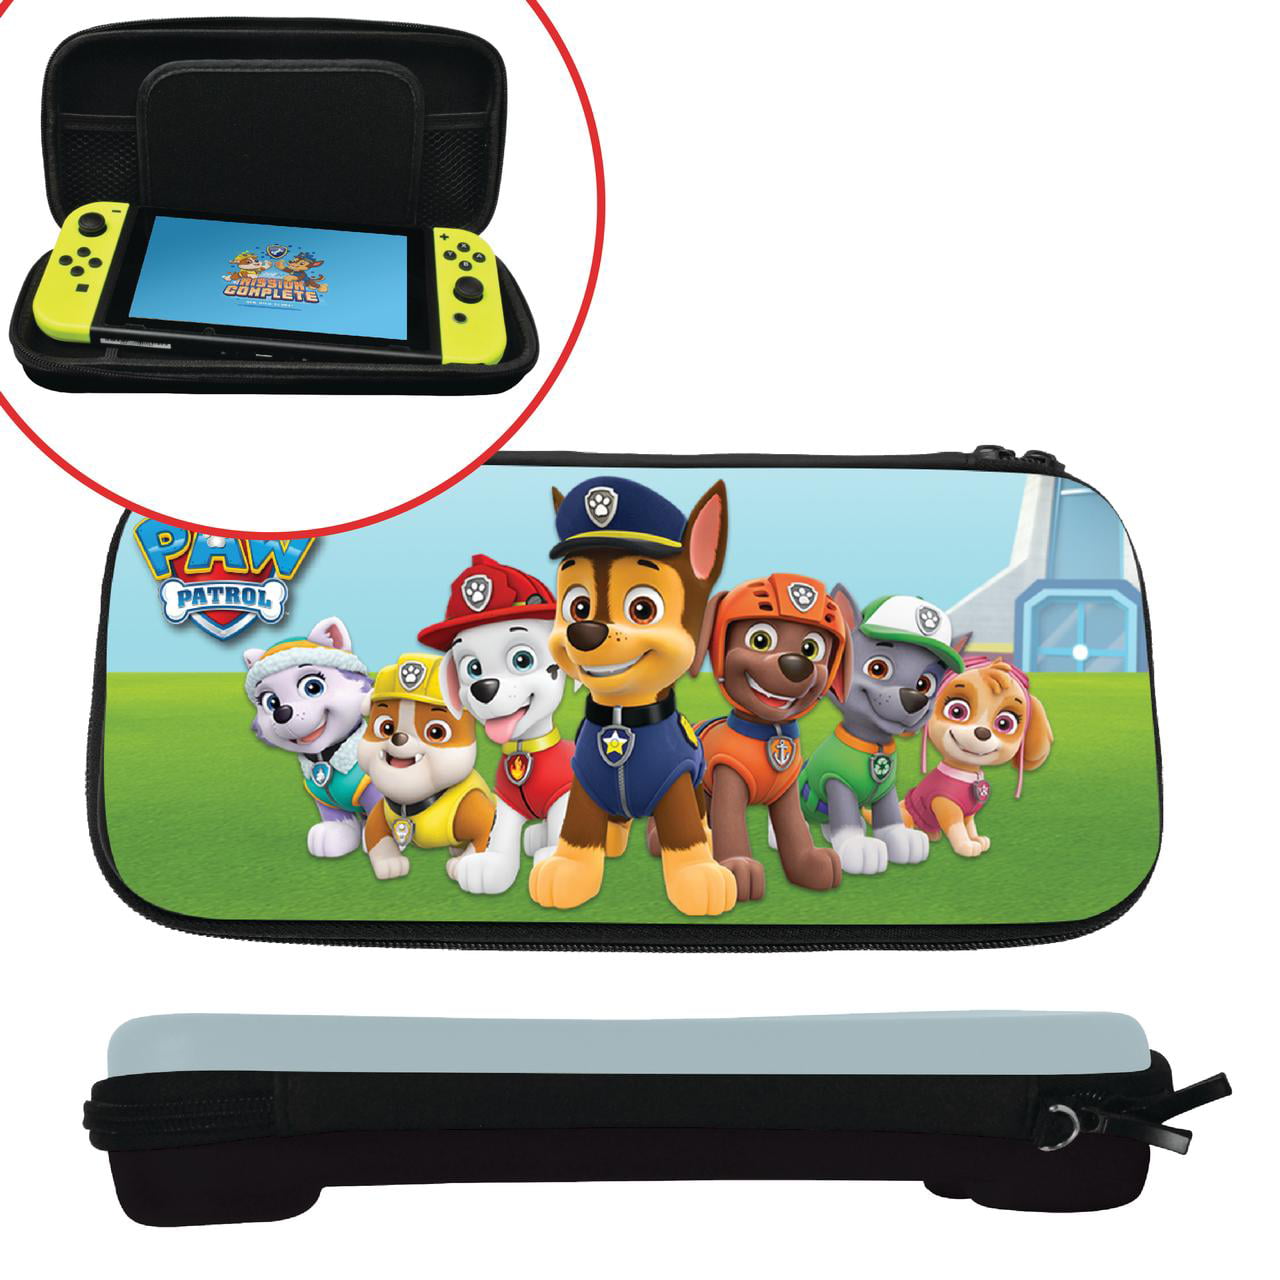 Ematic Patrol's Nintendo Switch Carrying Case + Screen Protector - Walmart.com